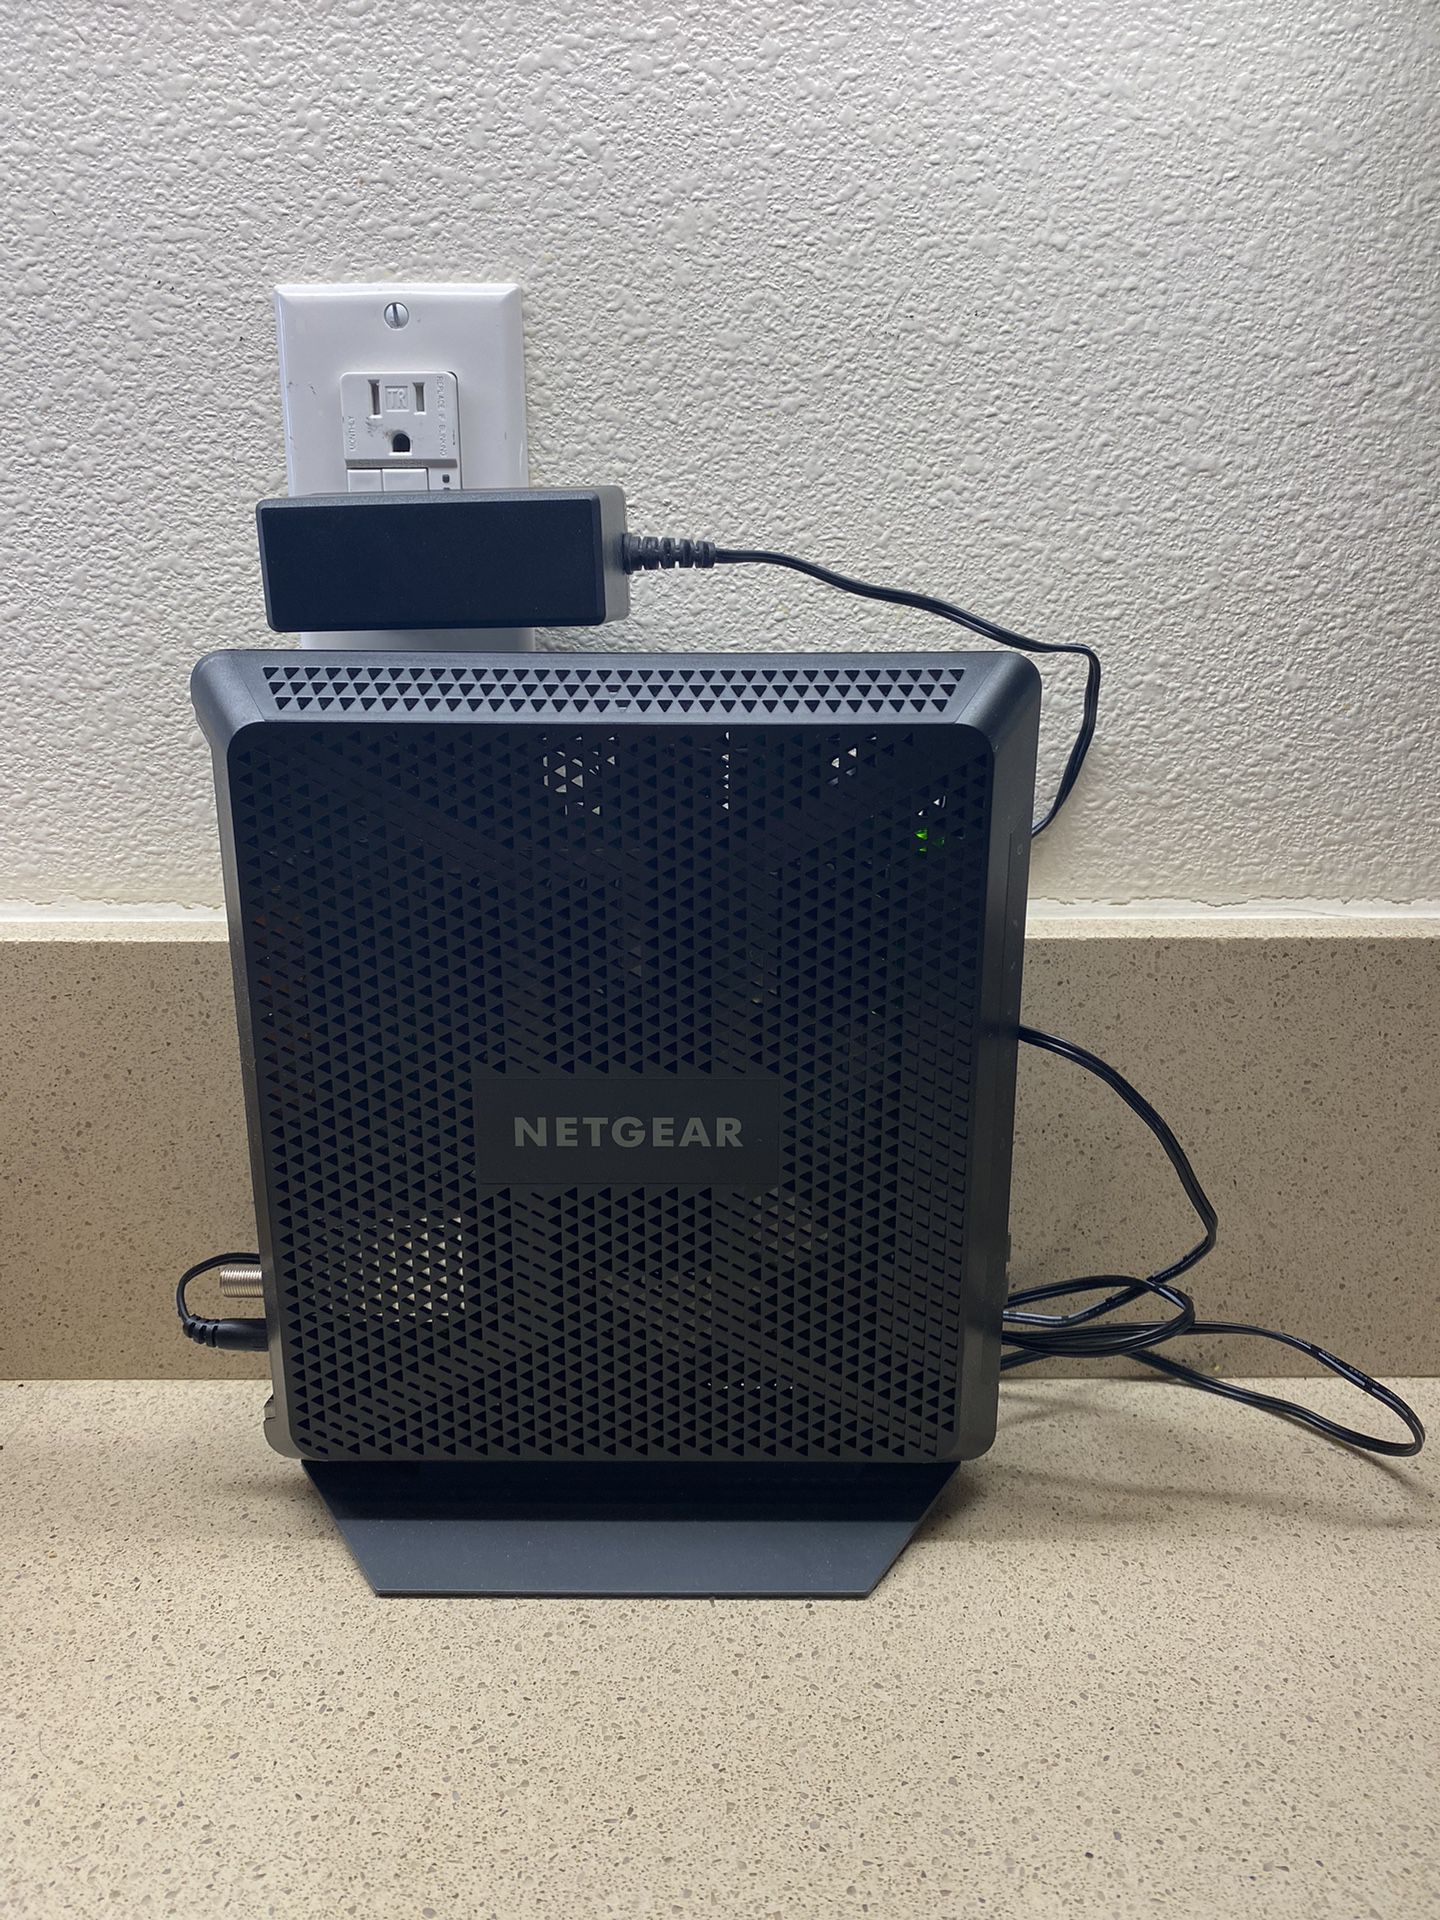 Netgear AC1900 WiFi Cable Modem Router